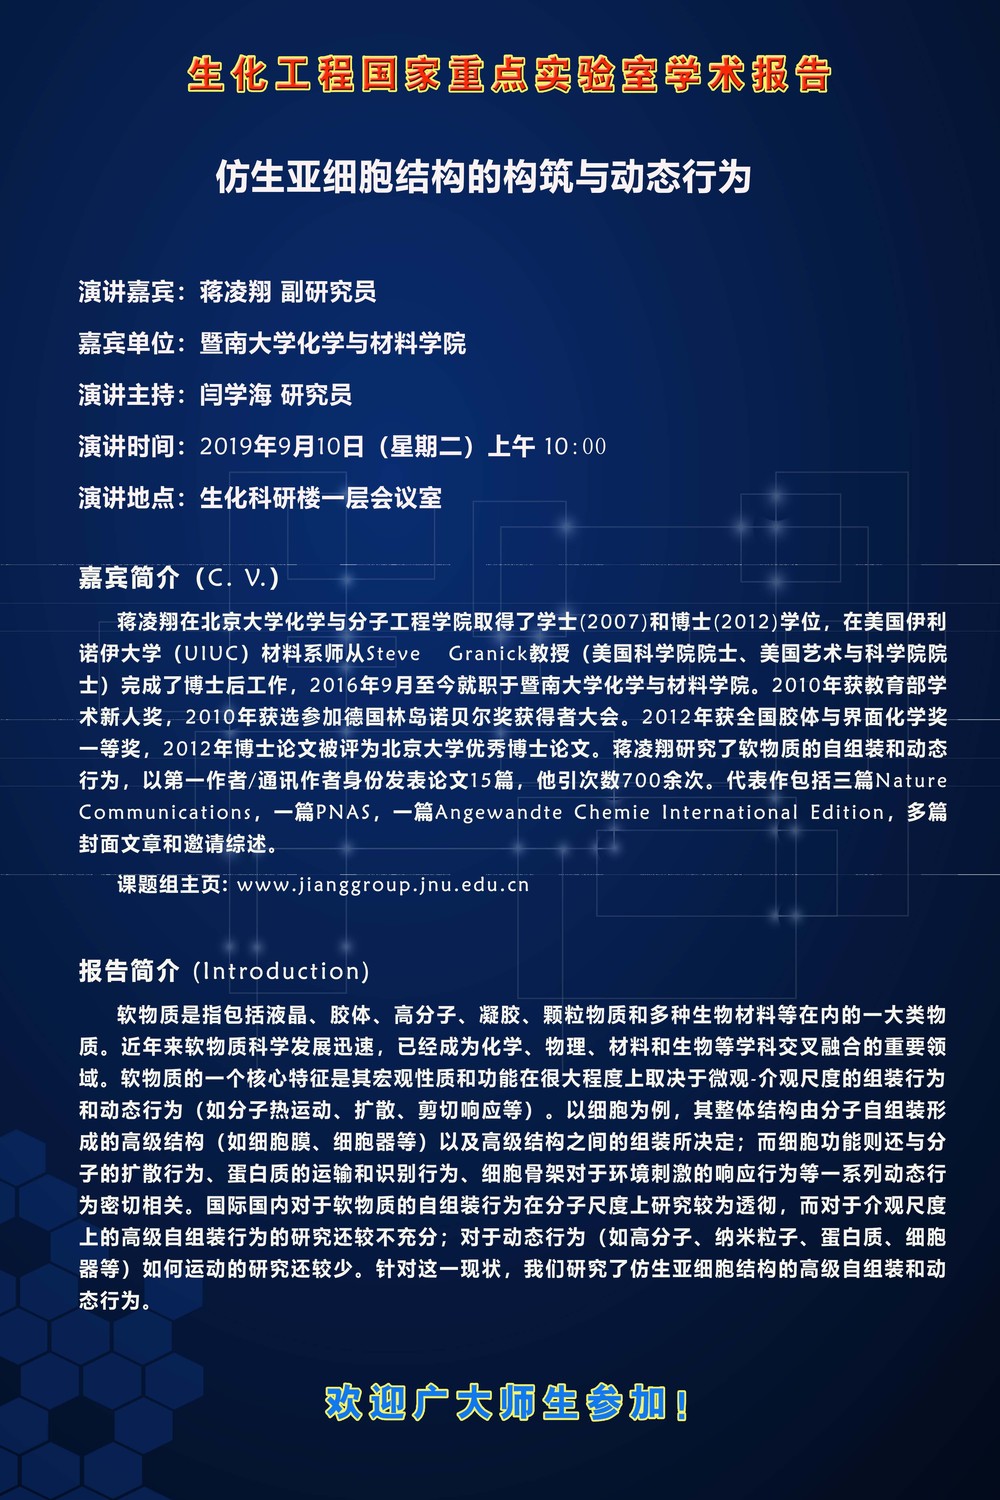 蒋凌翔 poster-small.jpg